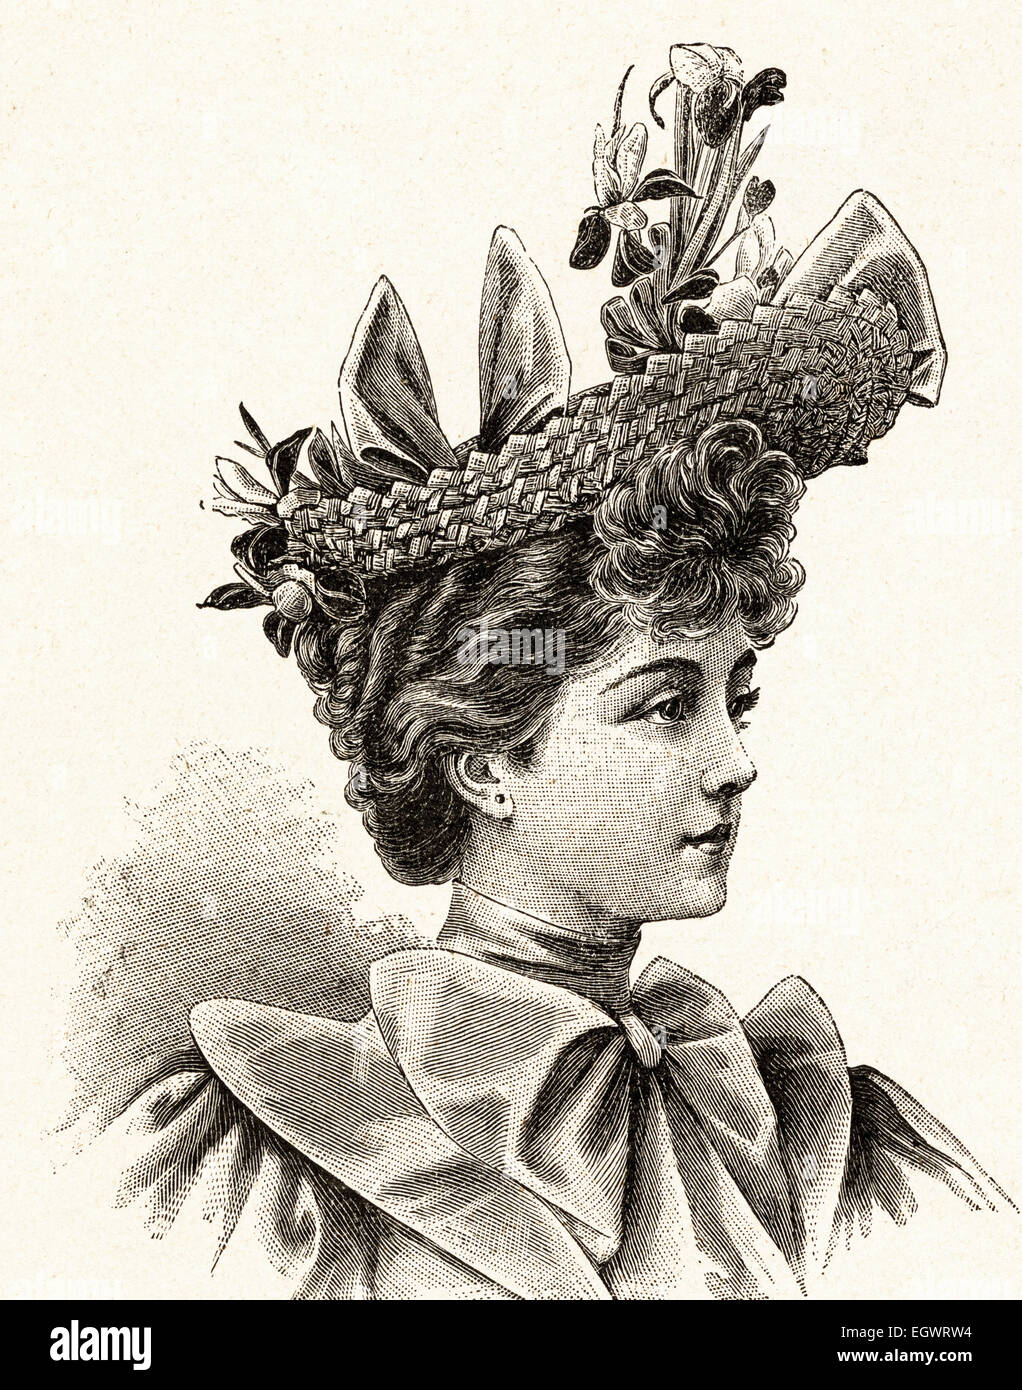 Viktorianische Frau Mode-Illustration, ca. 1895 Stockfoto